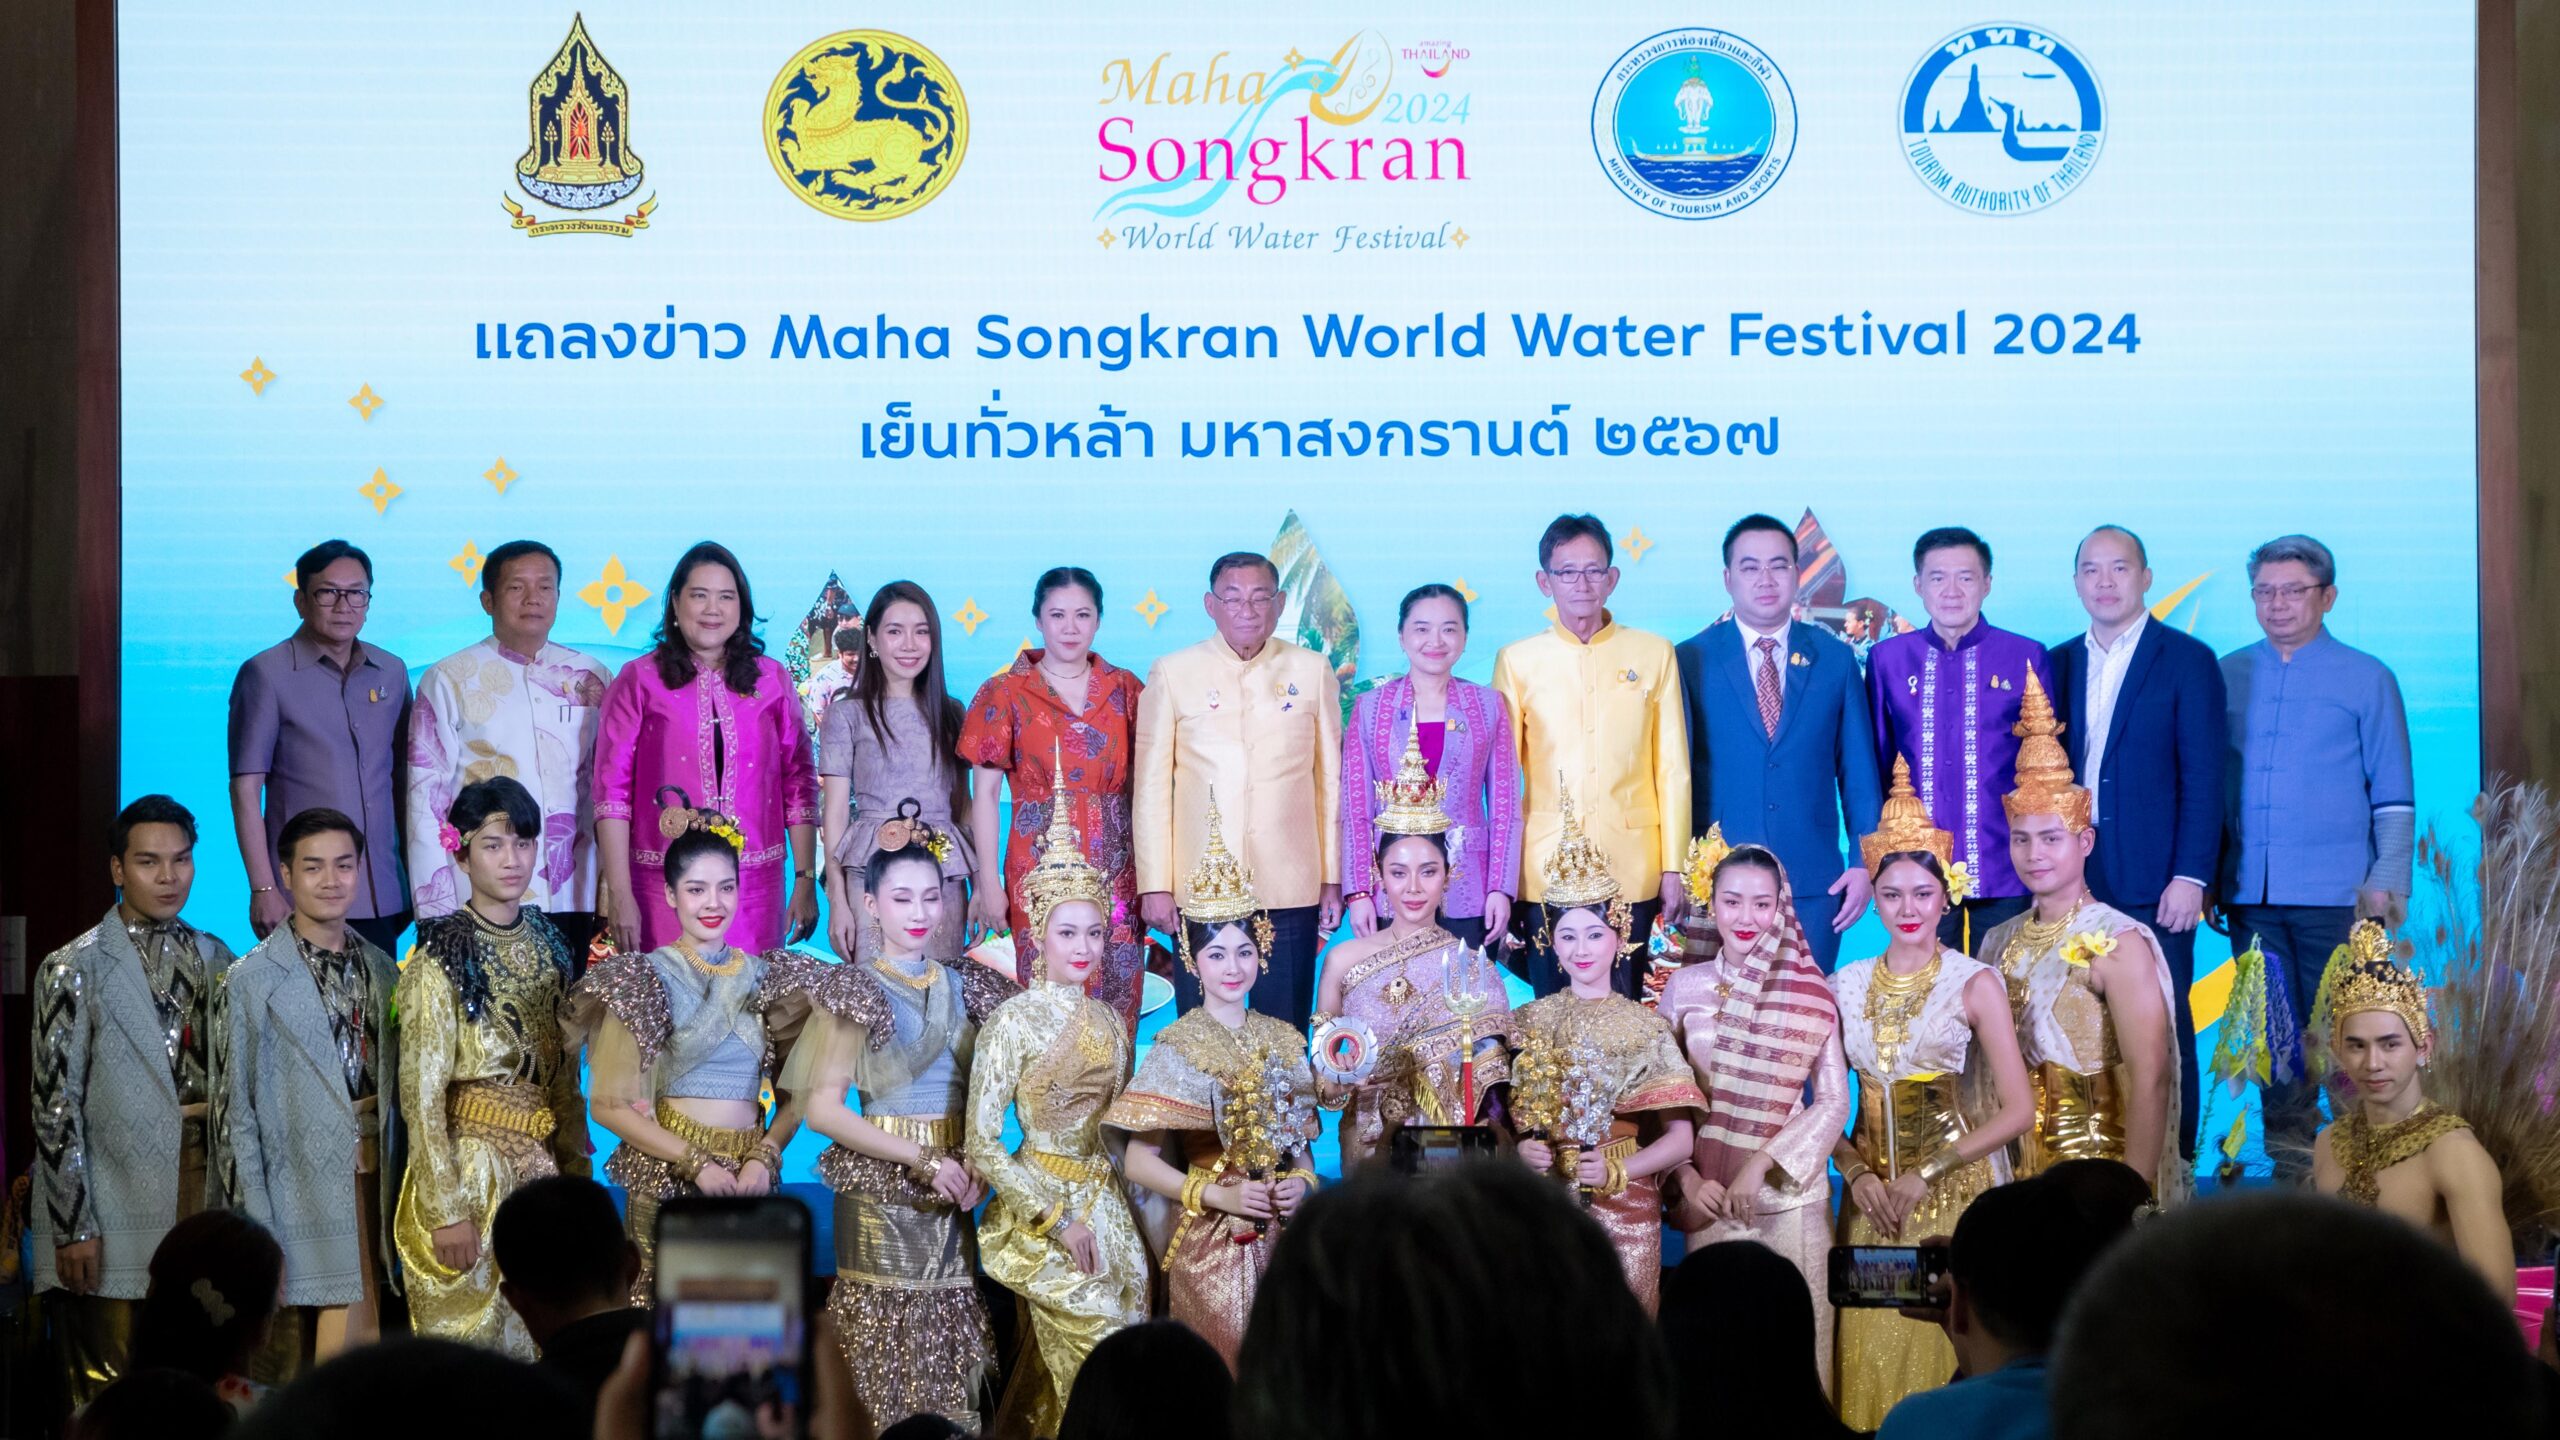 “Maha Songkran World Water Festival 2024” set to be among top 10 global